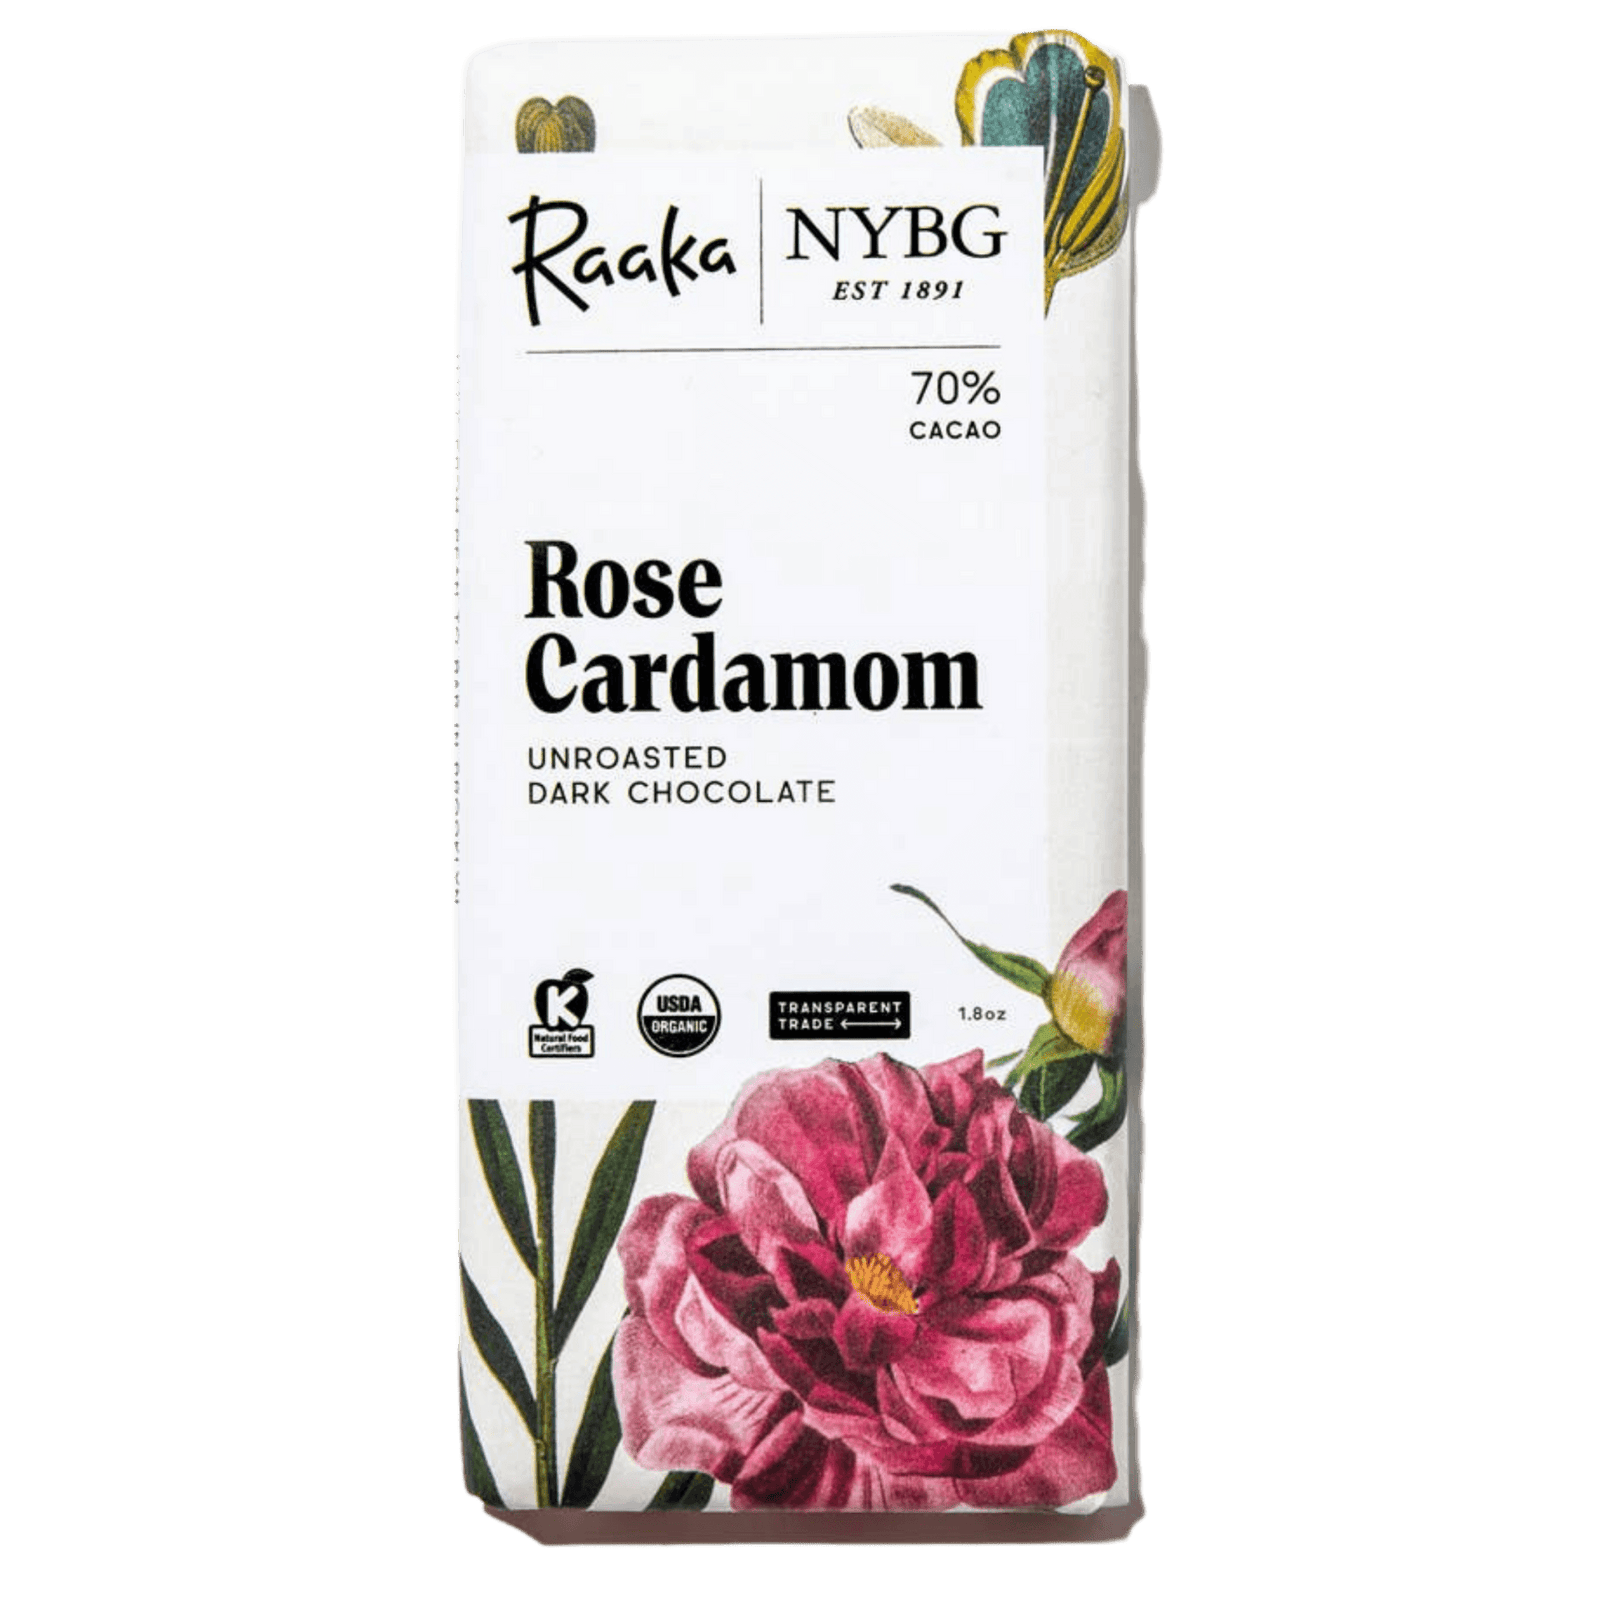 Rose Cardamom Un-roasted Chocolate By Raaka - Unboxme